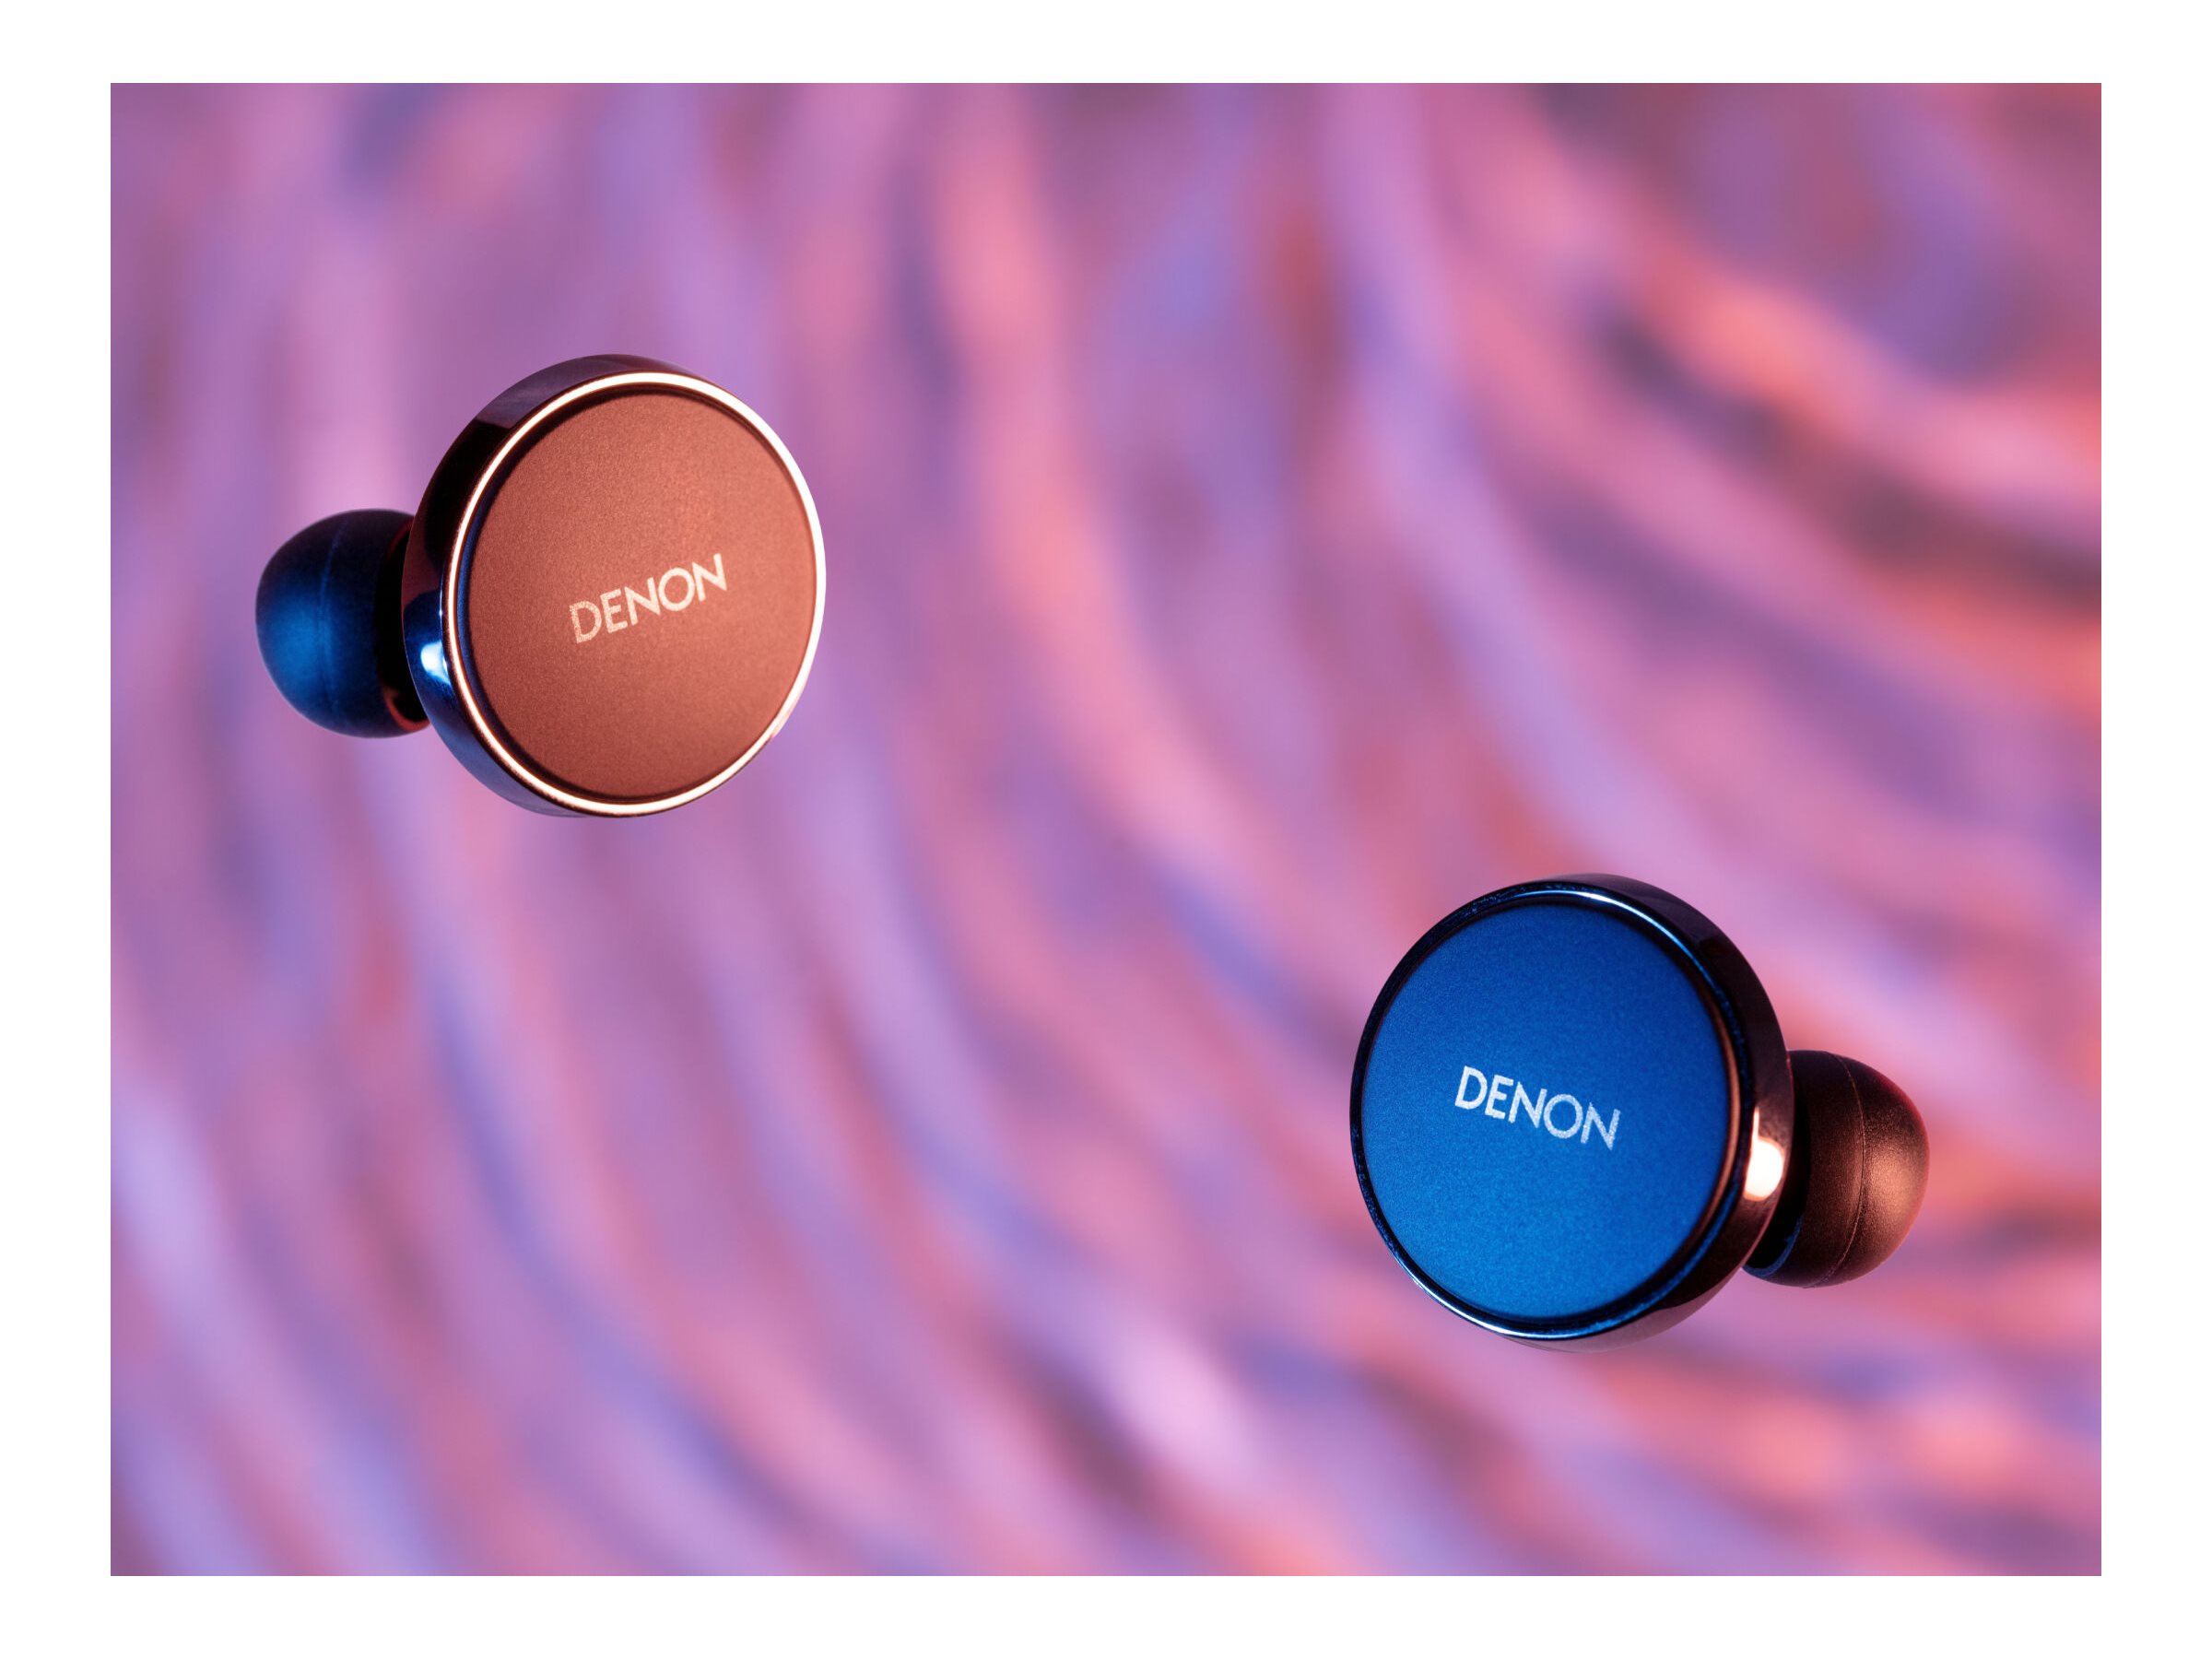 Denon PerL Pro True Wireless Earbuds - Black - AHC15PLBKEM